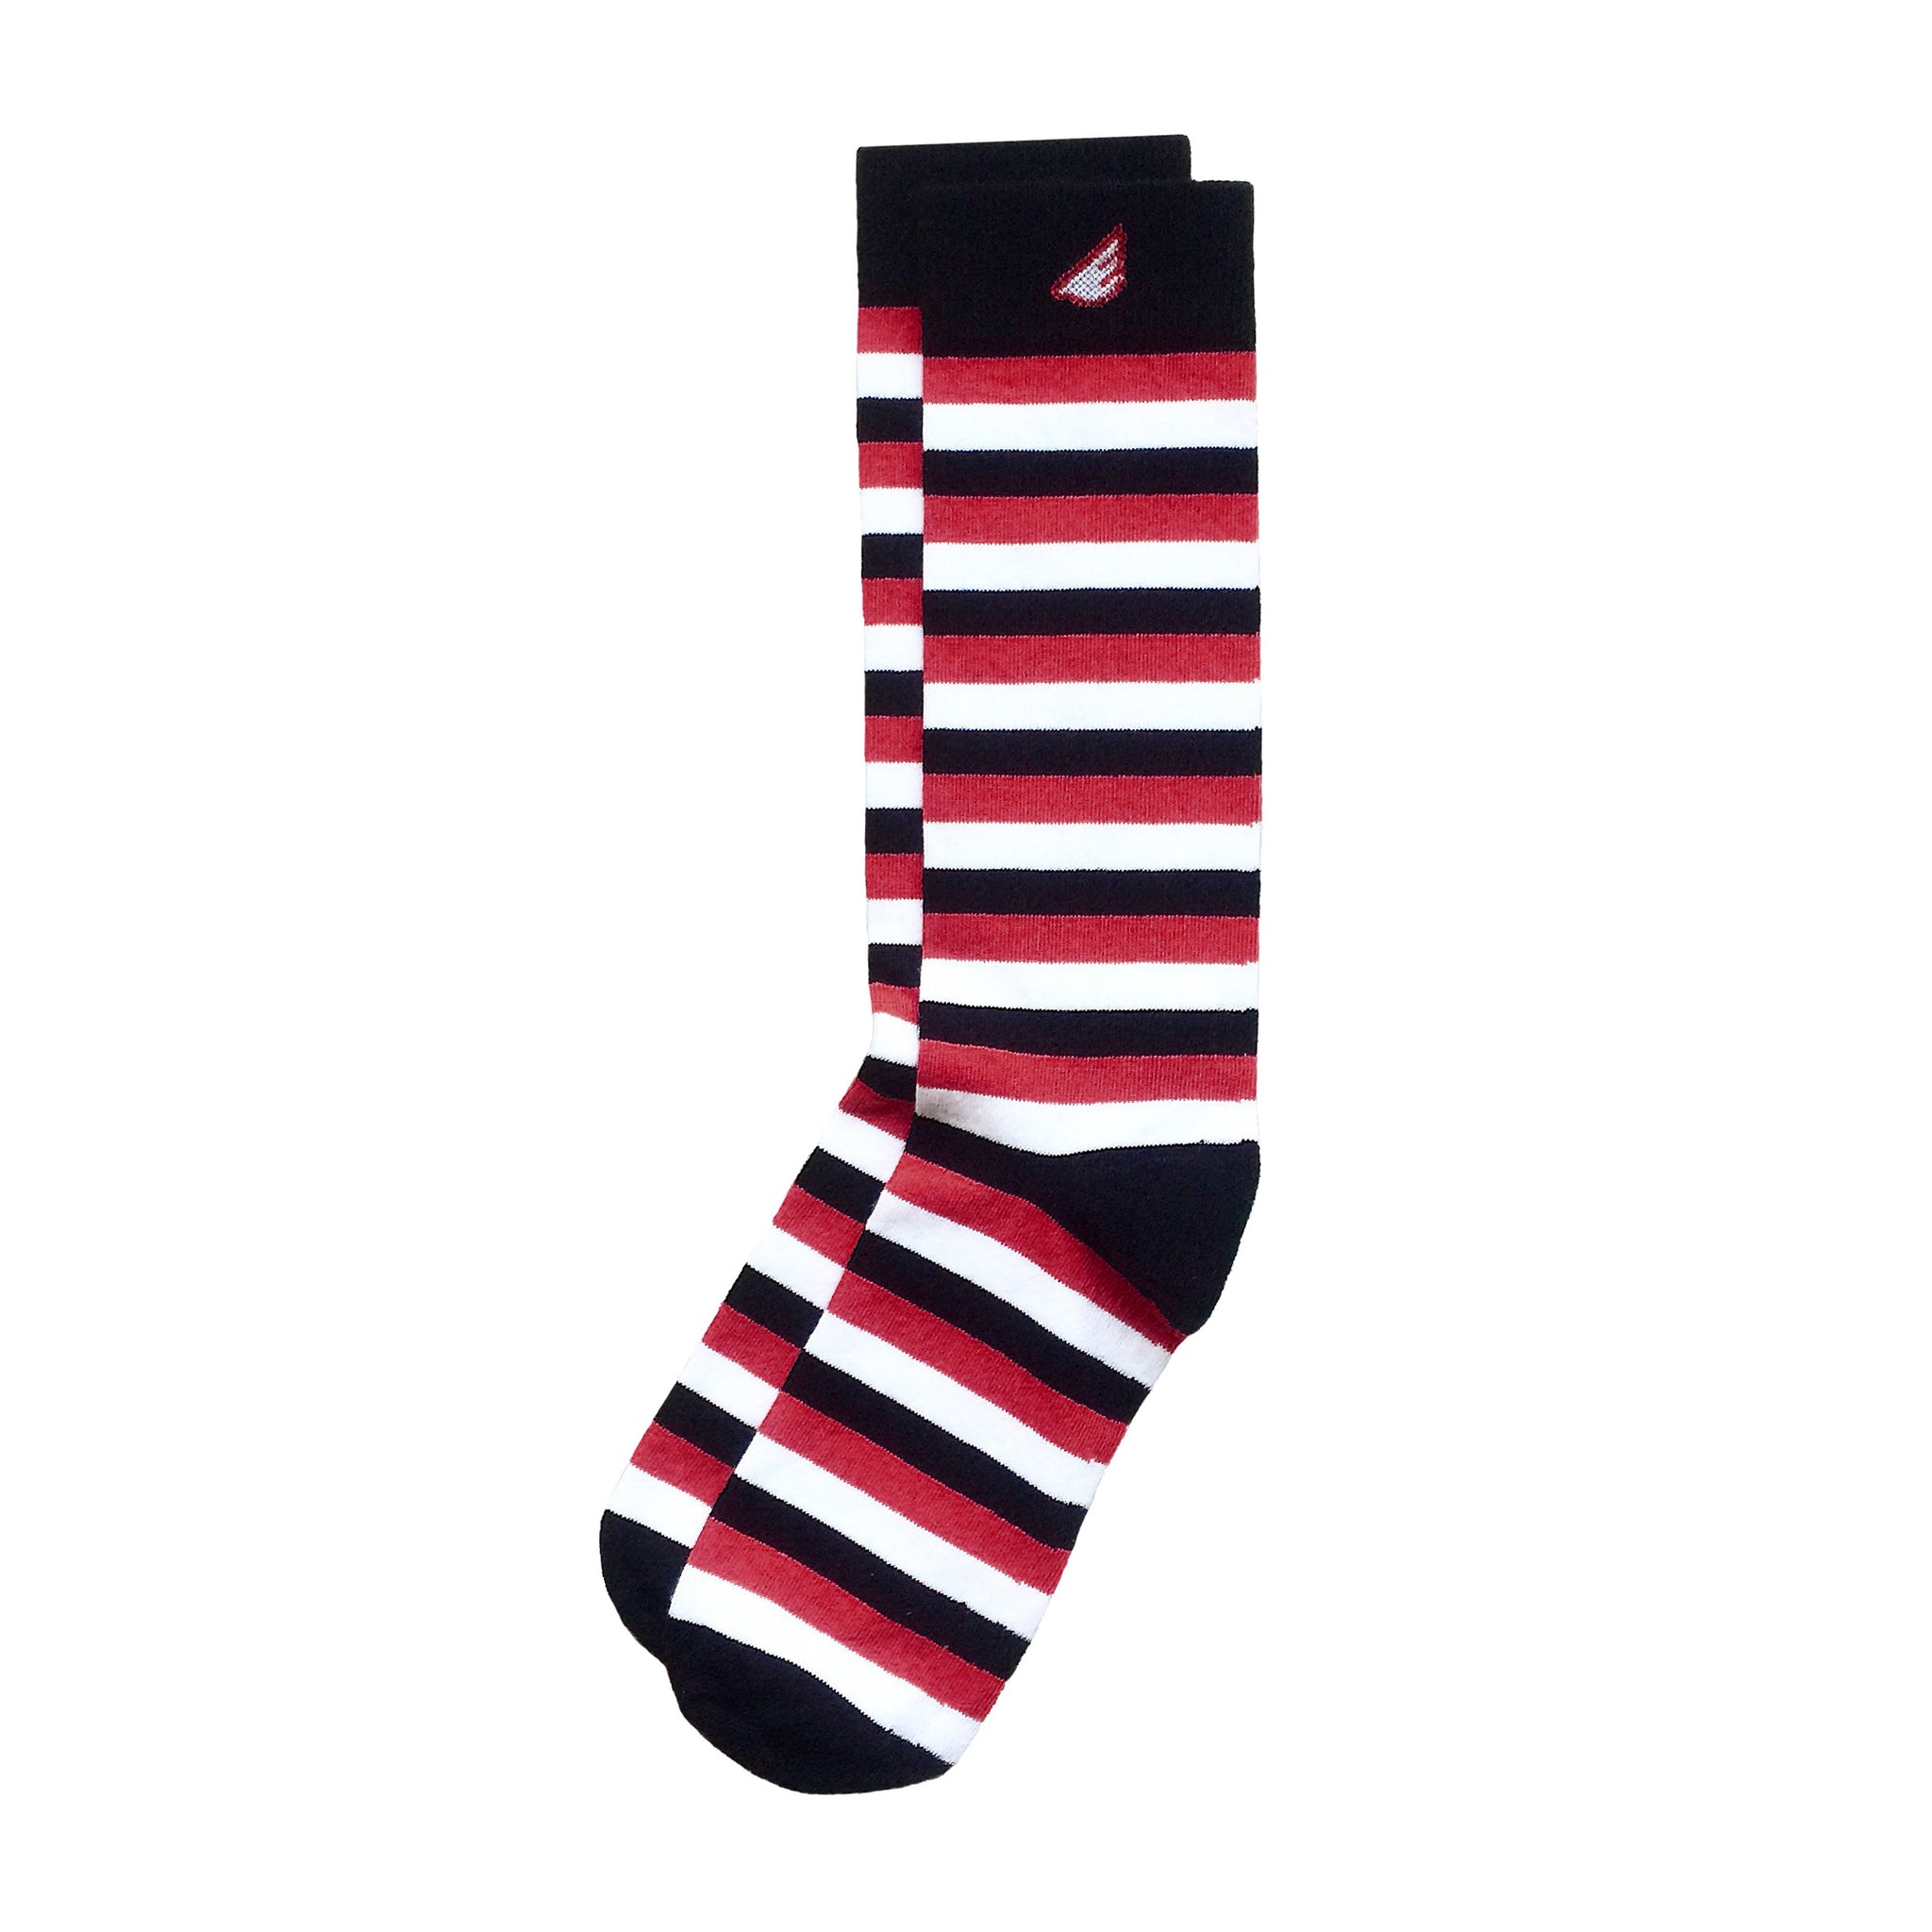 Mens Fun Colorful Black Red Supima Cotton USA-made Dress Socks 3-pack ...